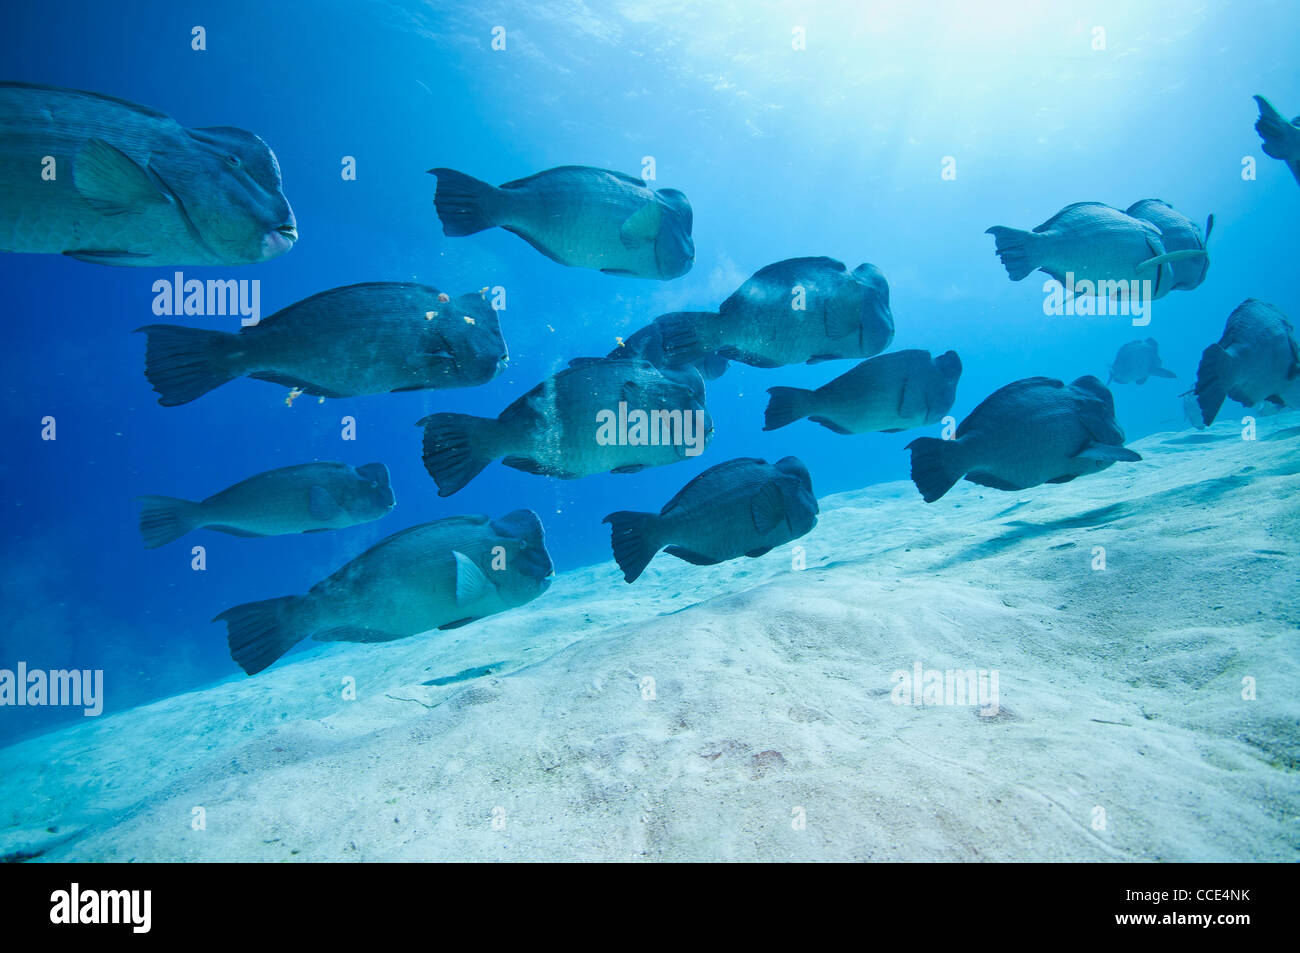 school of Green humphead parrotfish, Great barrier reef, australia Stock Photo